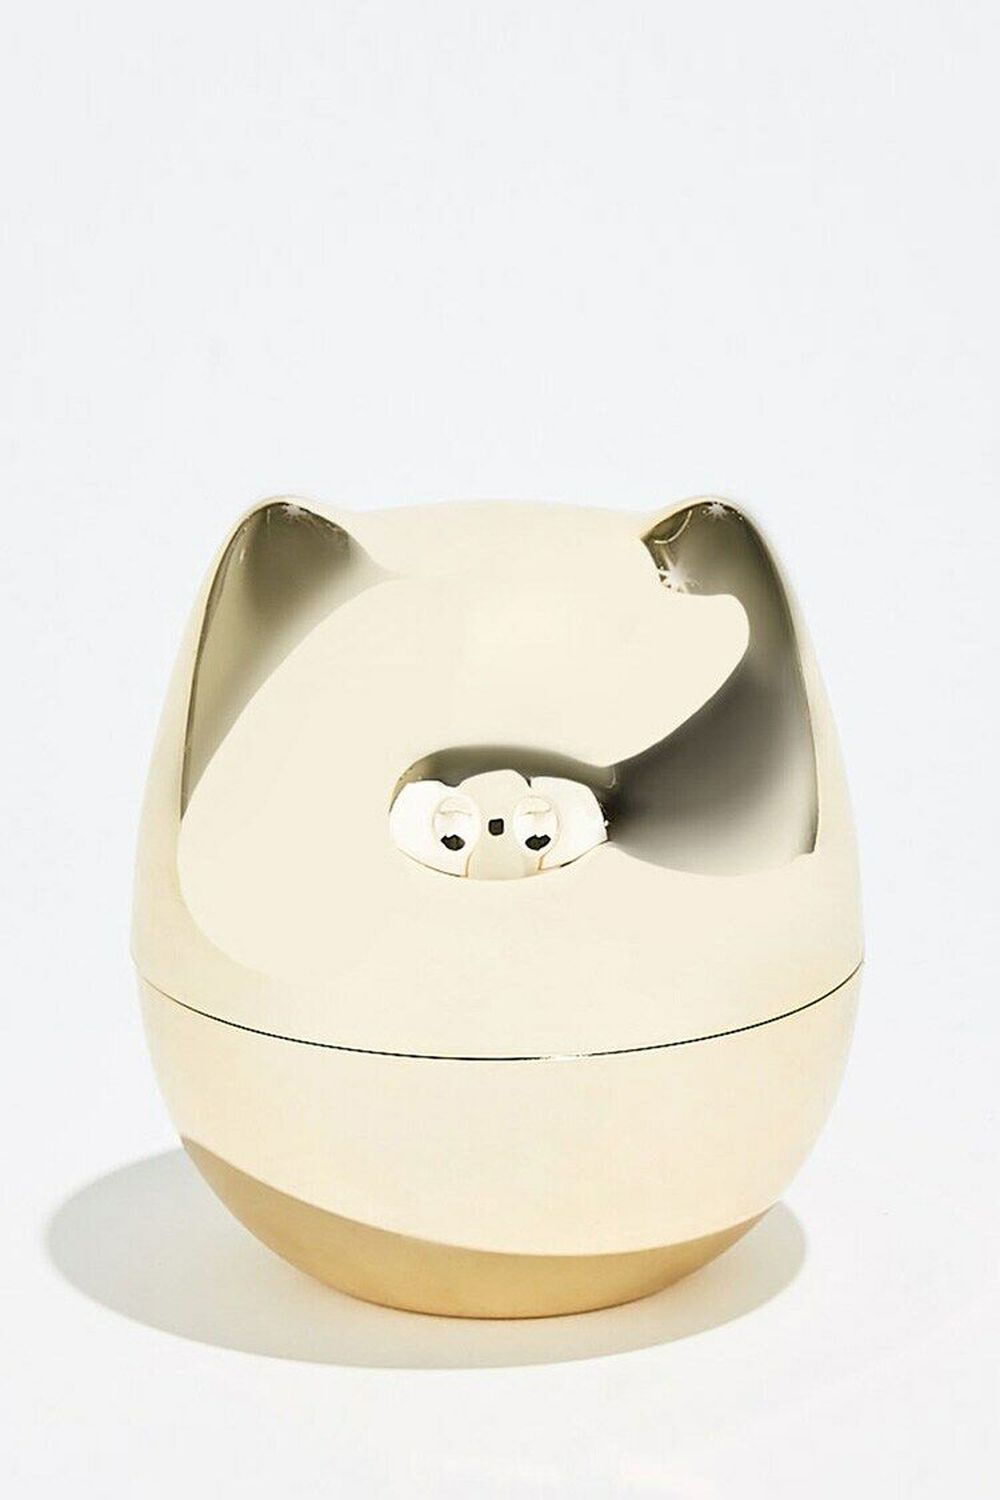 TONYMOLY Golden Pig Collagen Bounce Mask, image 3